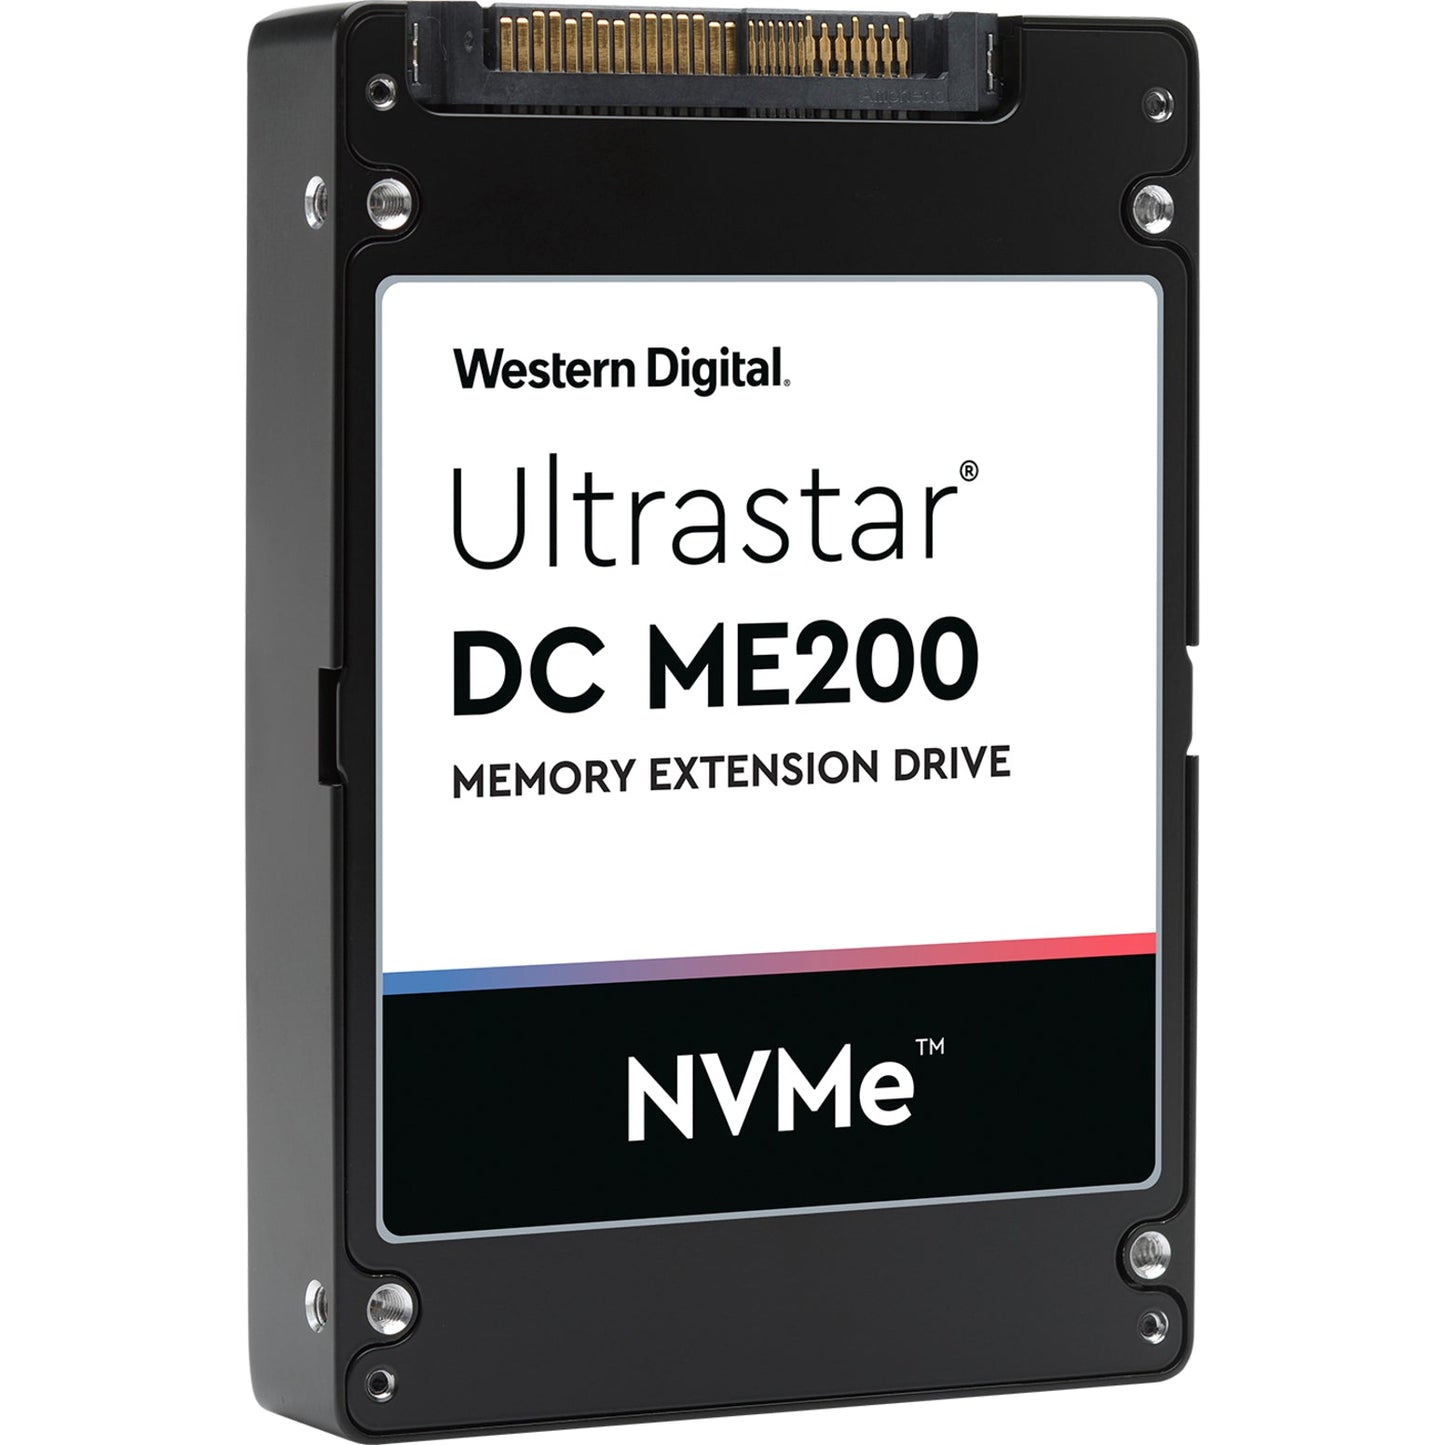 Western Digital Ultrastar DC ME200 4 TB Solid State Drive - 2.5" Internal - U.2 (SFF-8639) NVMe (PCI Express 3.0)